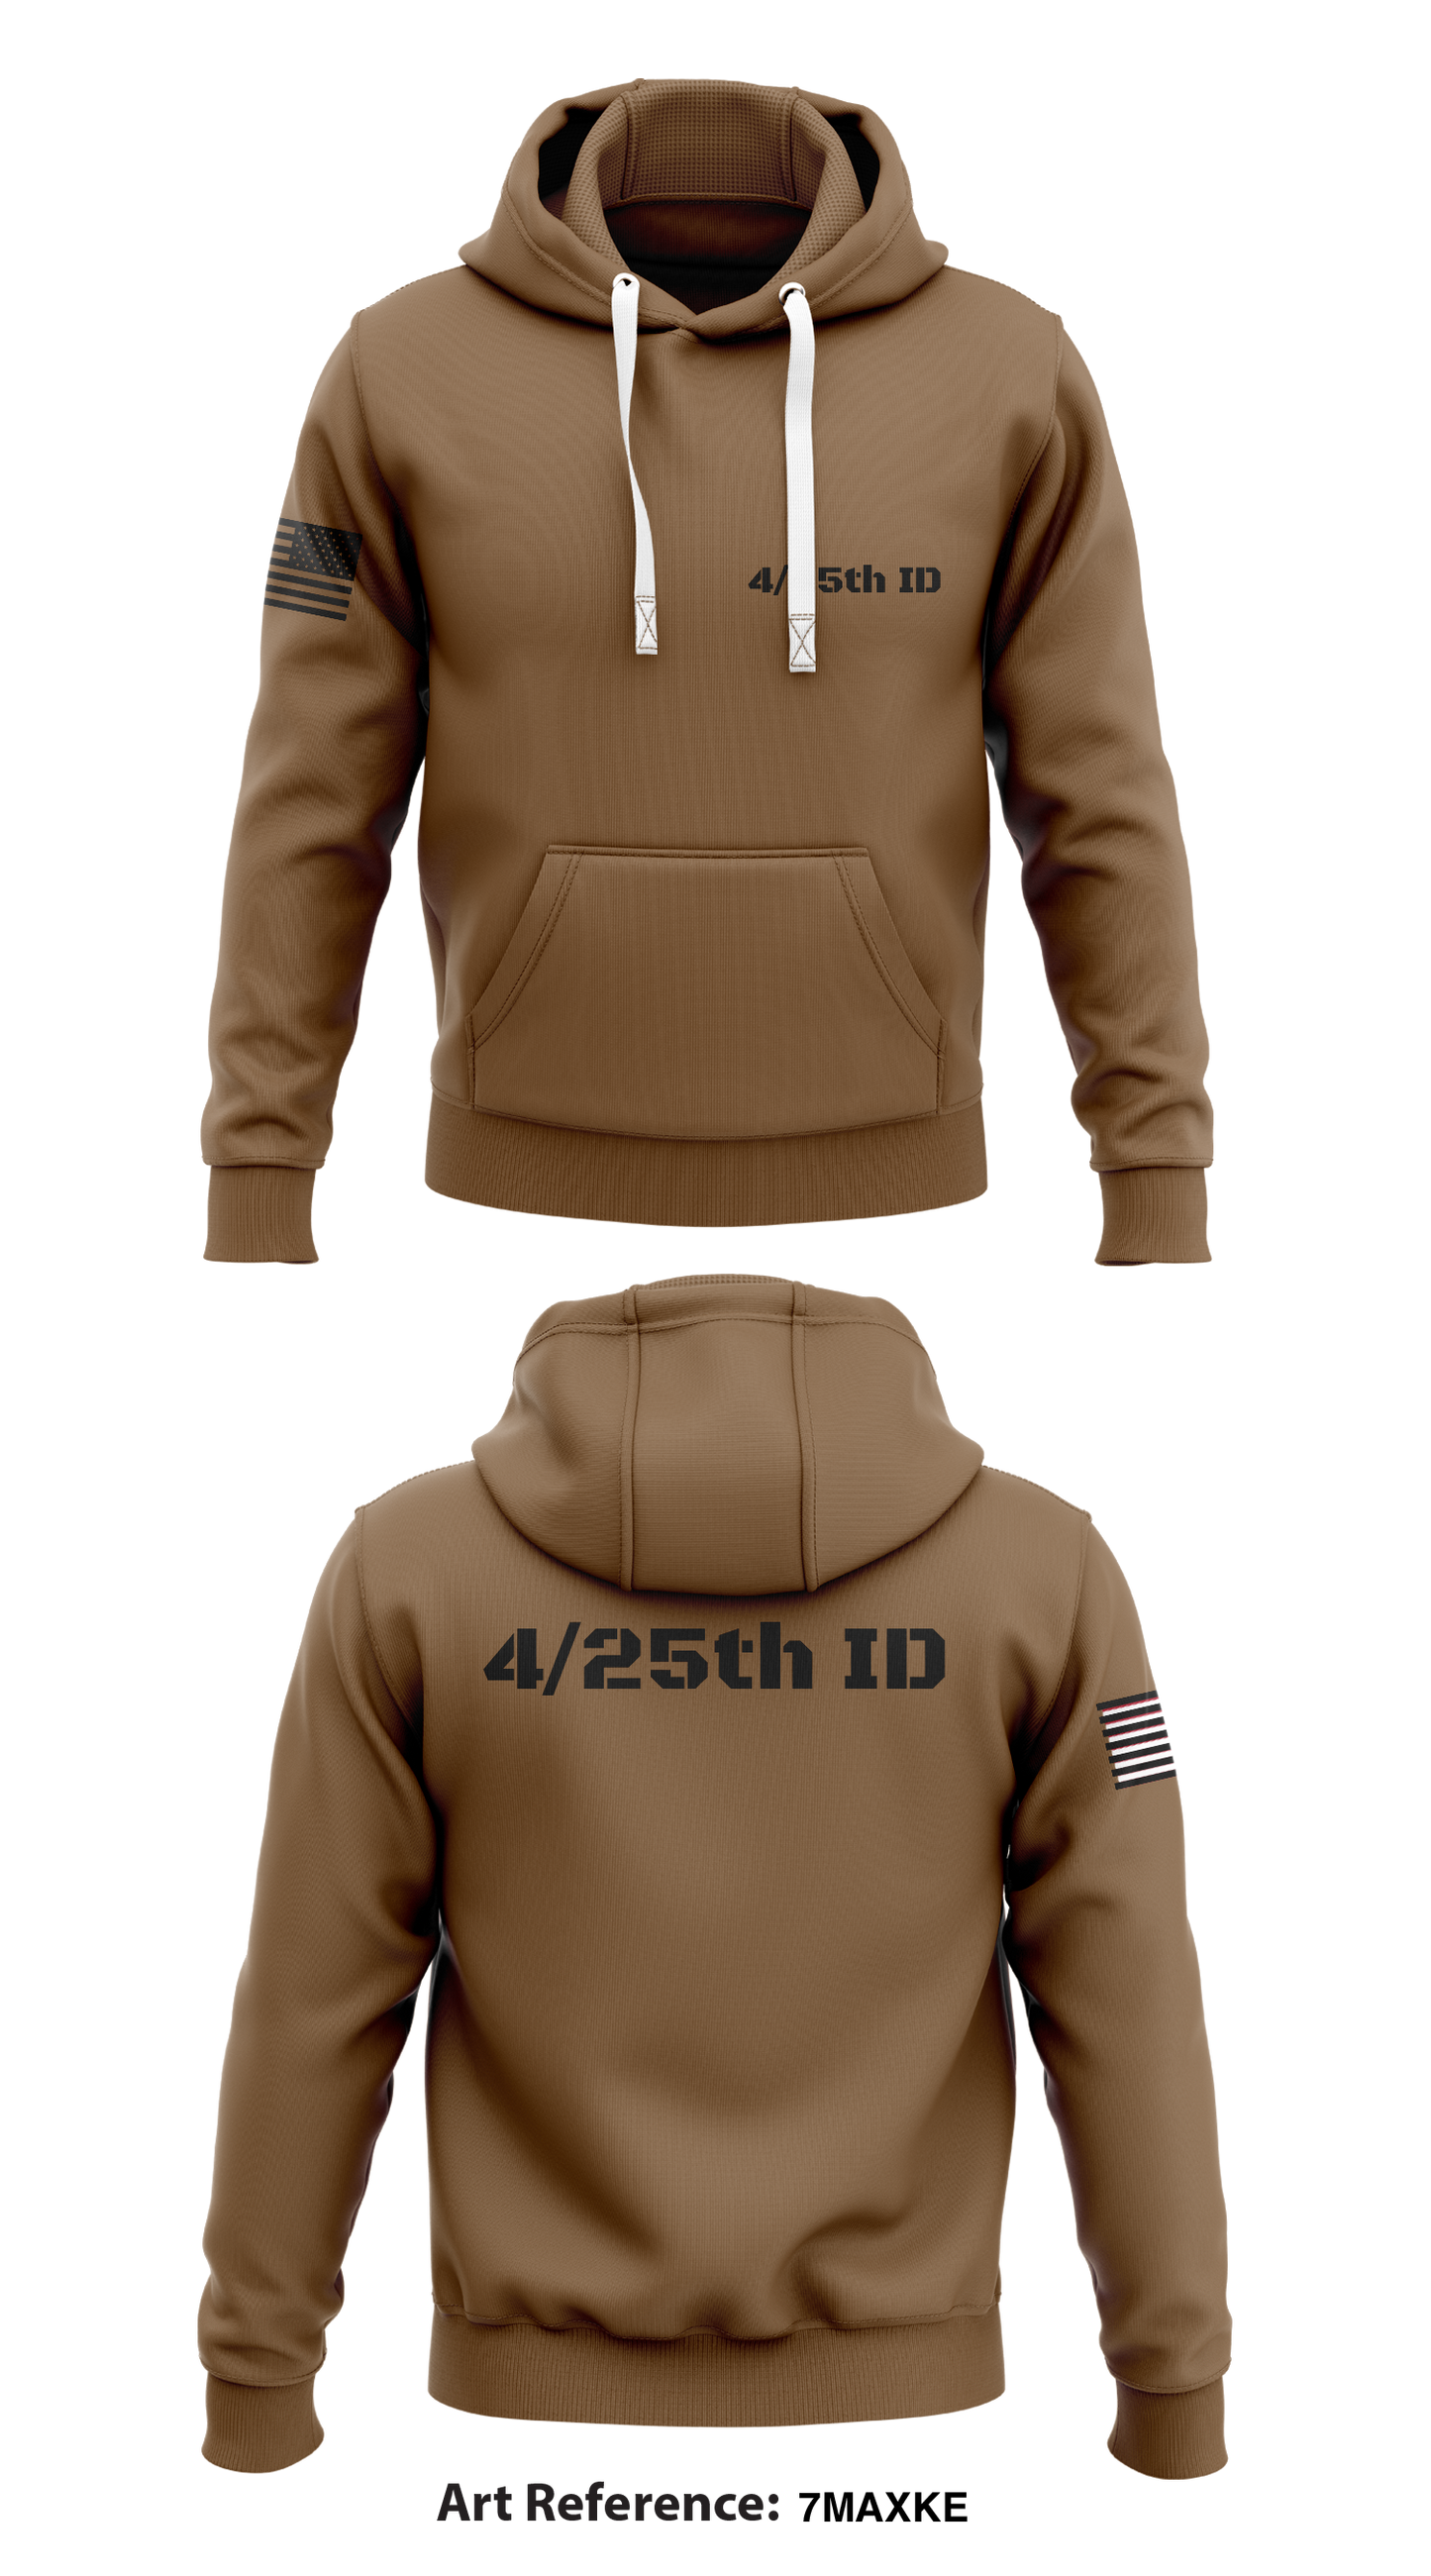 4/25th ID Store 1  Core Men's Hooded Performance Sweatshirt - 7maXKE